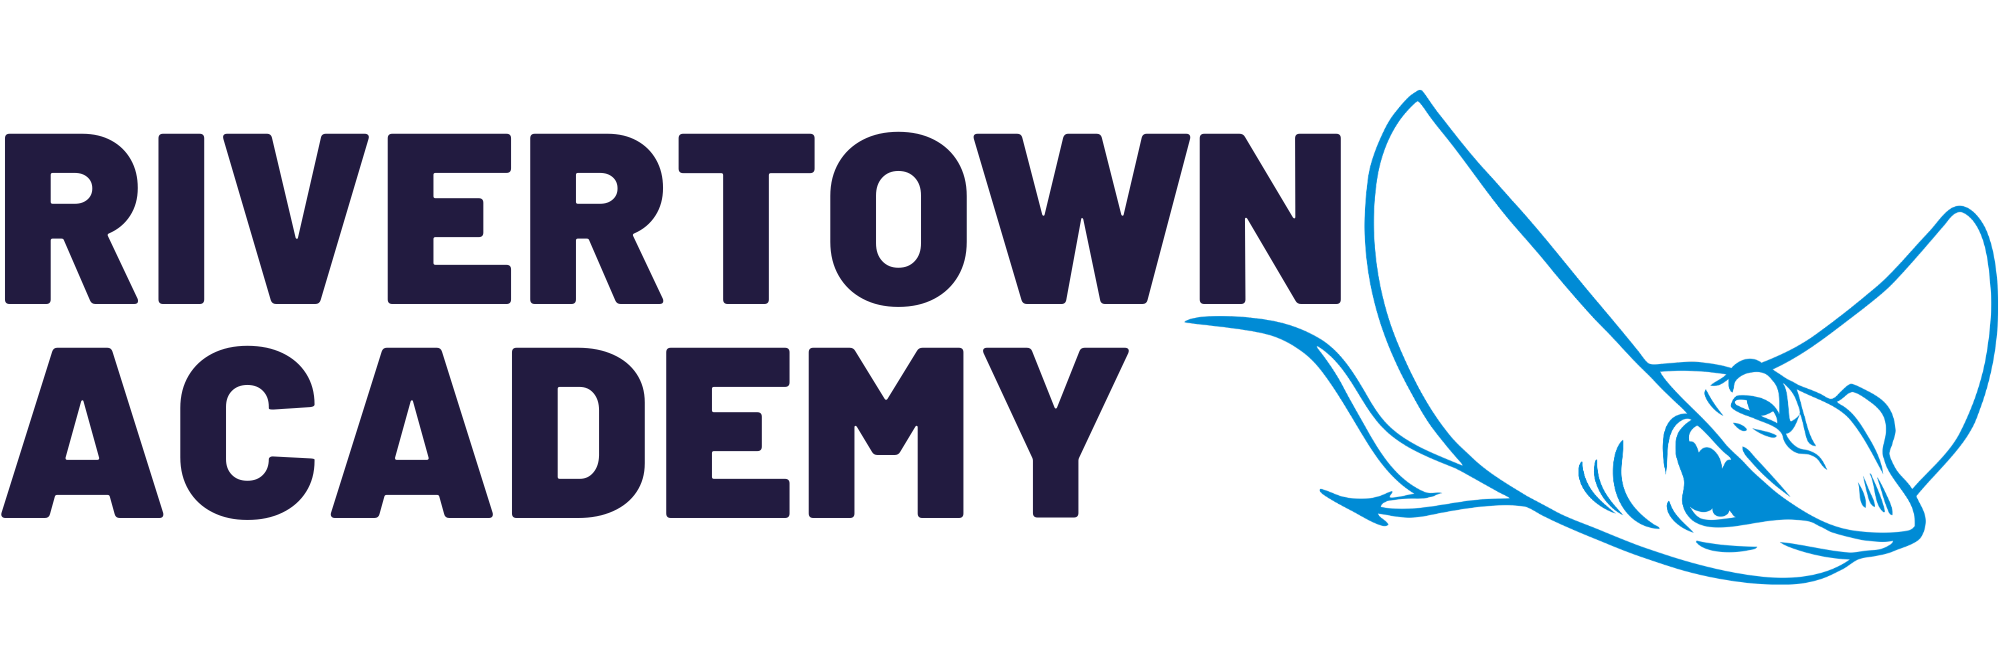 Rivertown Academy